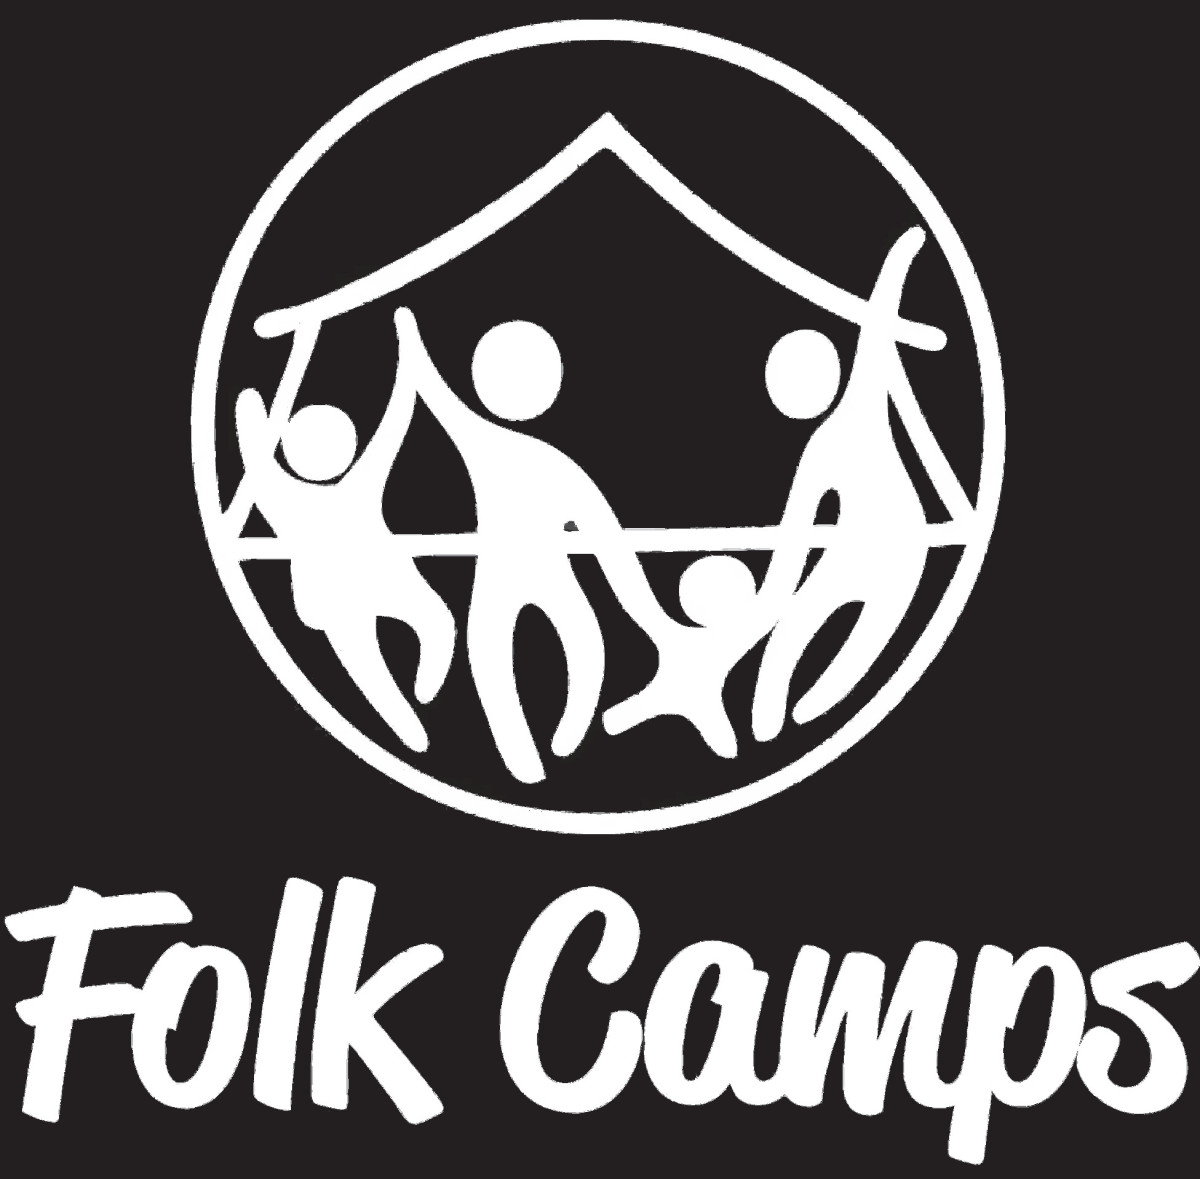 Club merchandise online shop designer - Folk Camps Customer Exam